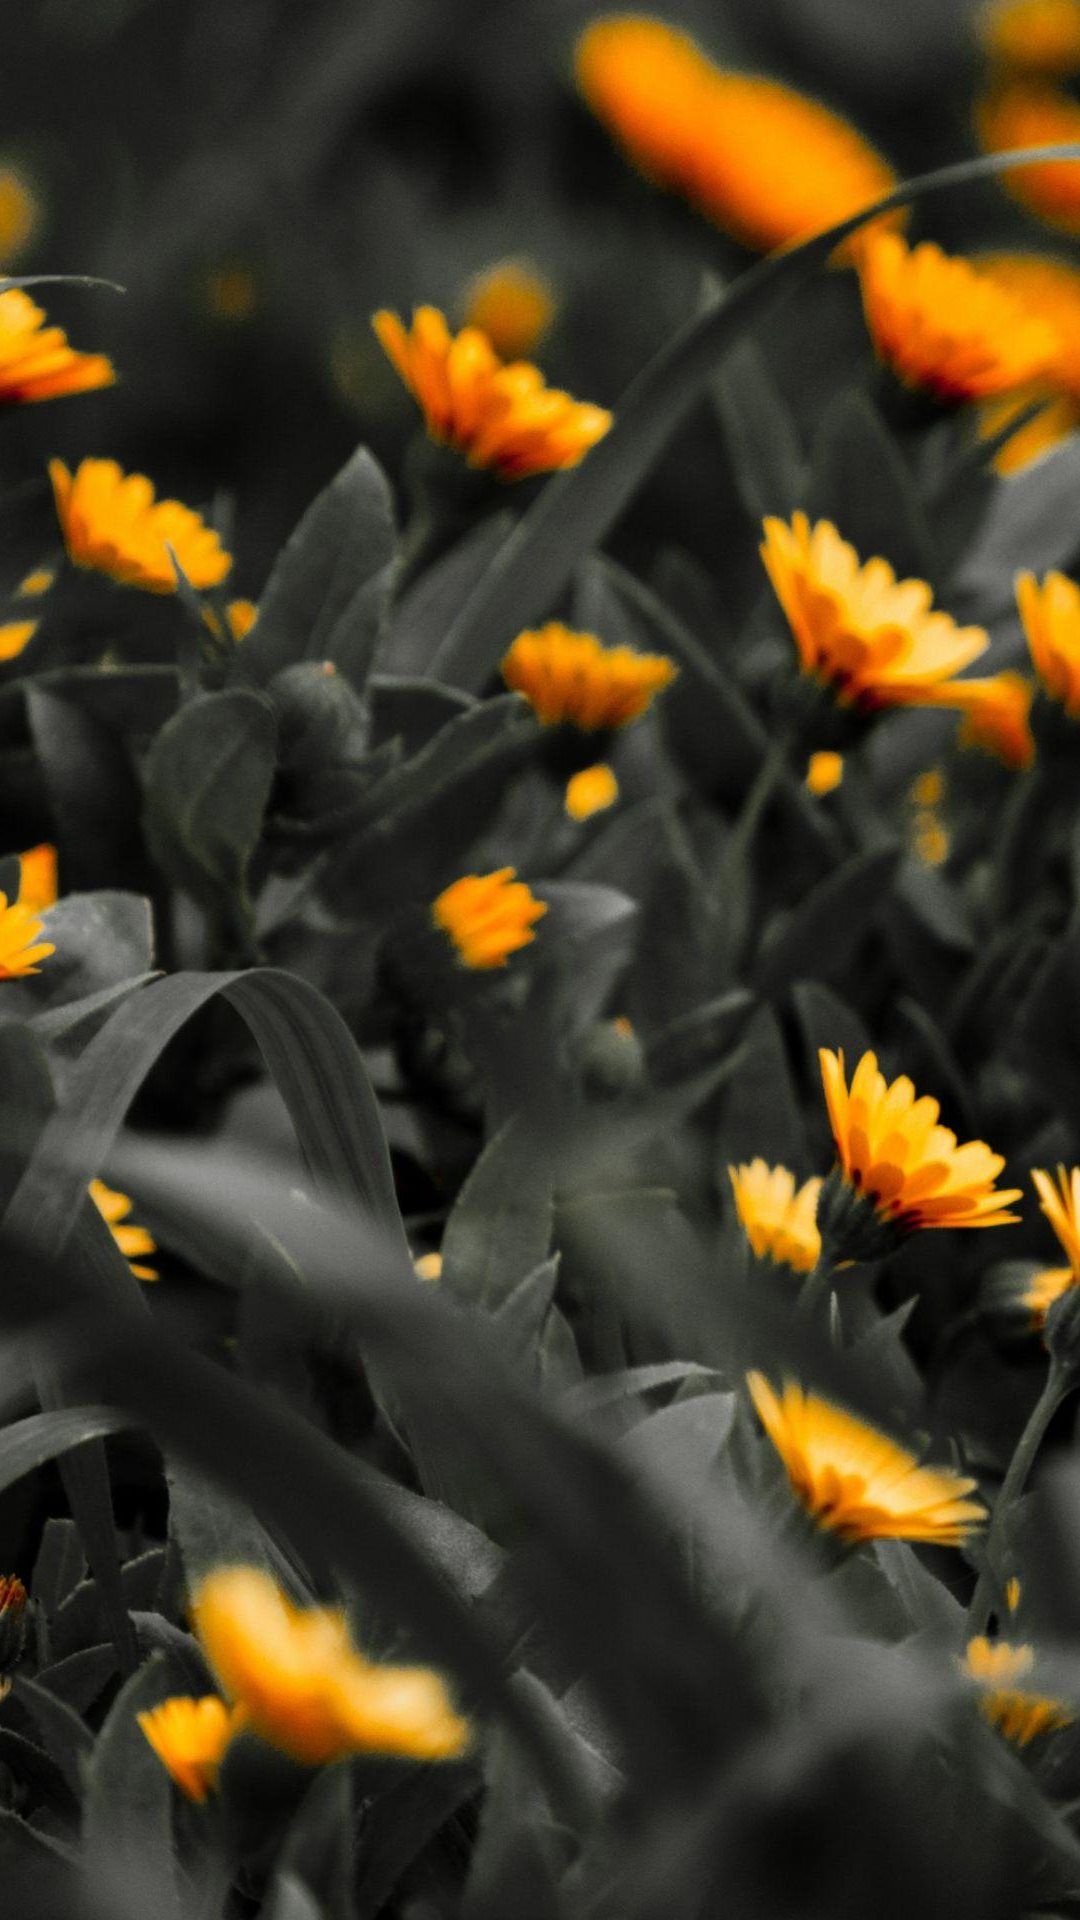 Black Orange Flowers Android Wallpaper free download